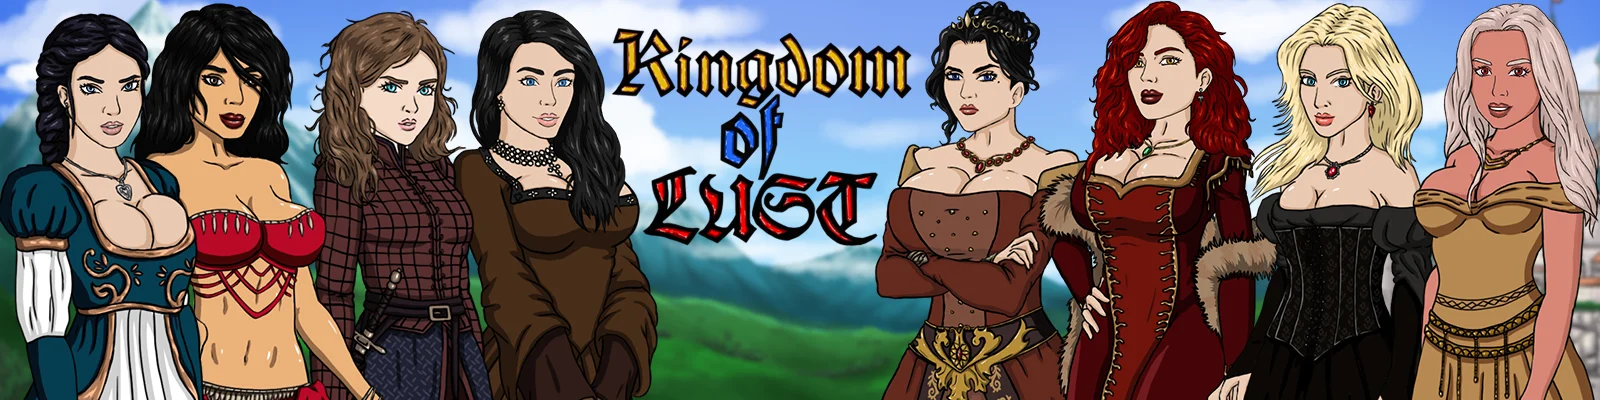 Kingdom of Lust v.0.3.5